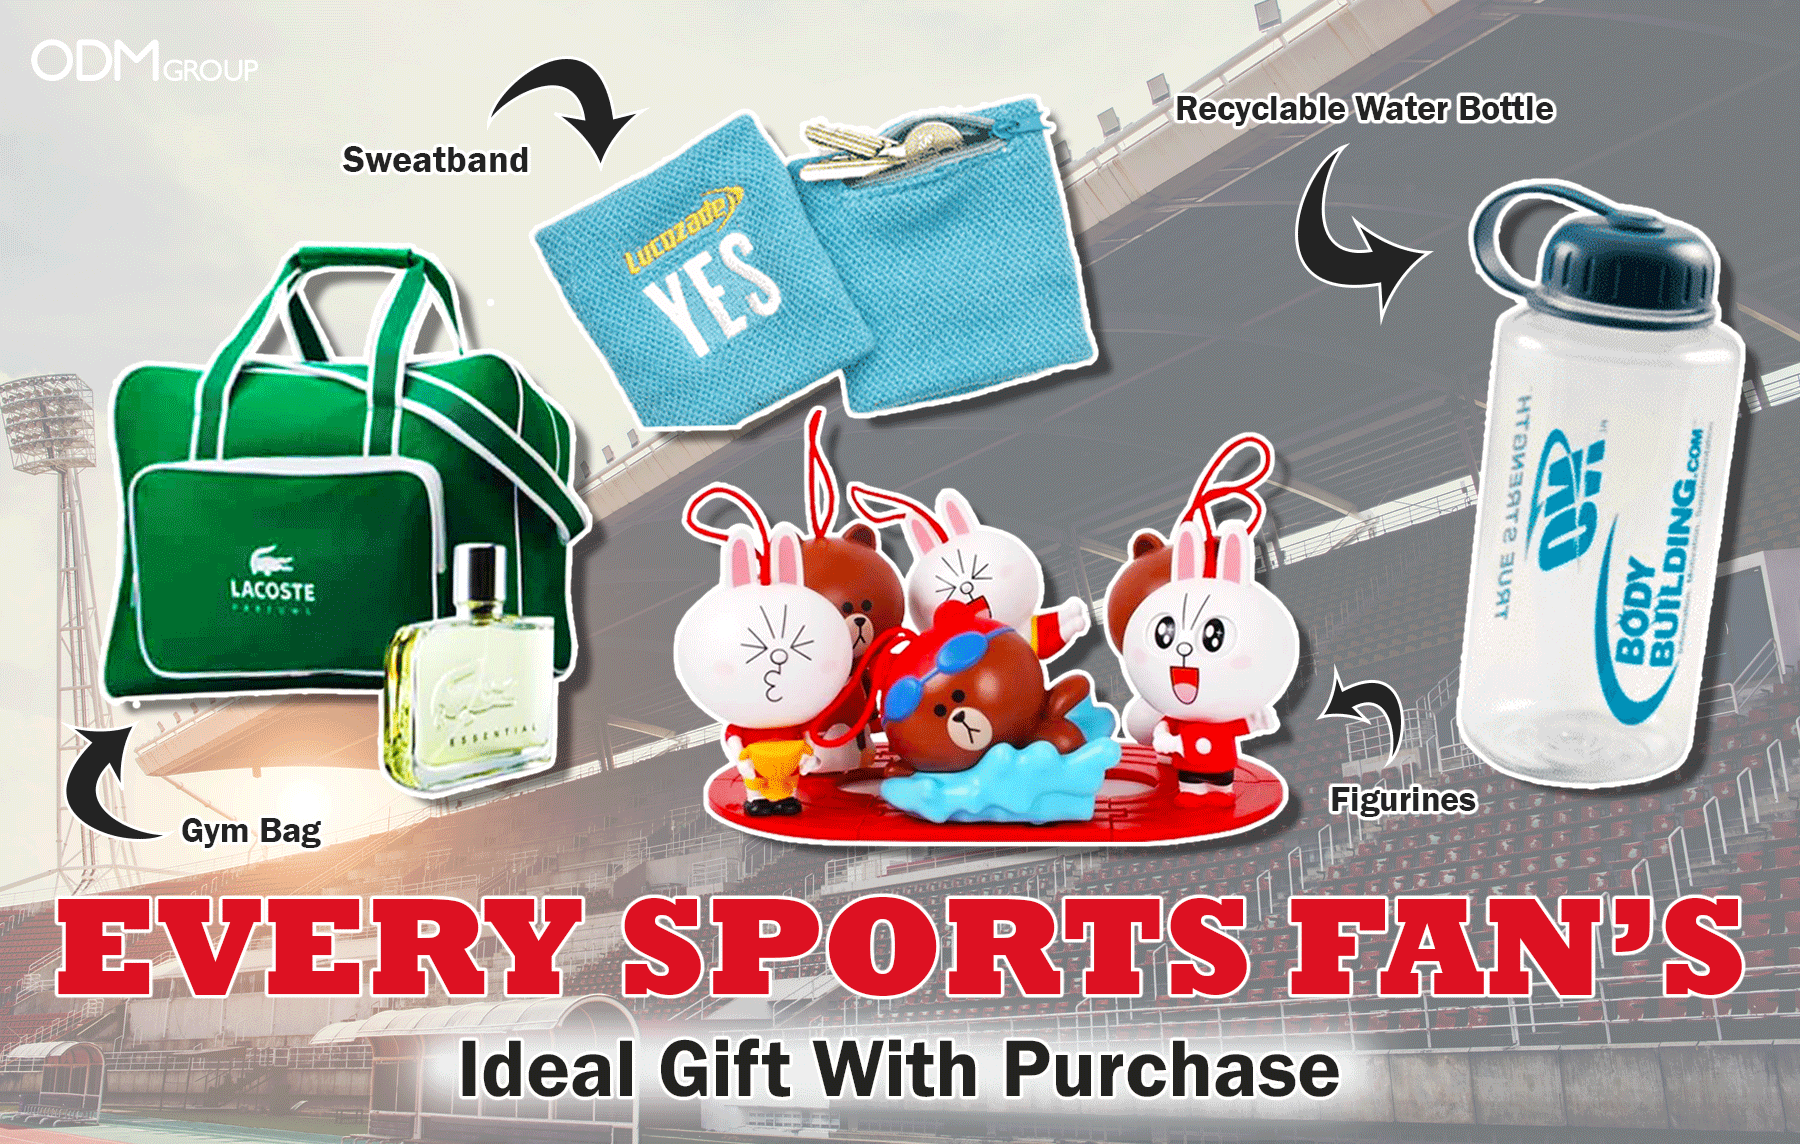 Rabbit Bodybuilder Gifts & Merchandise for Sale